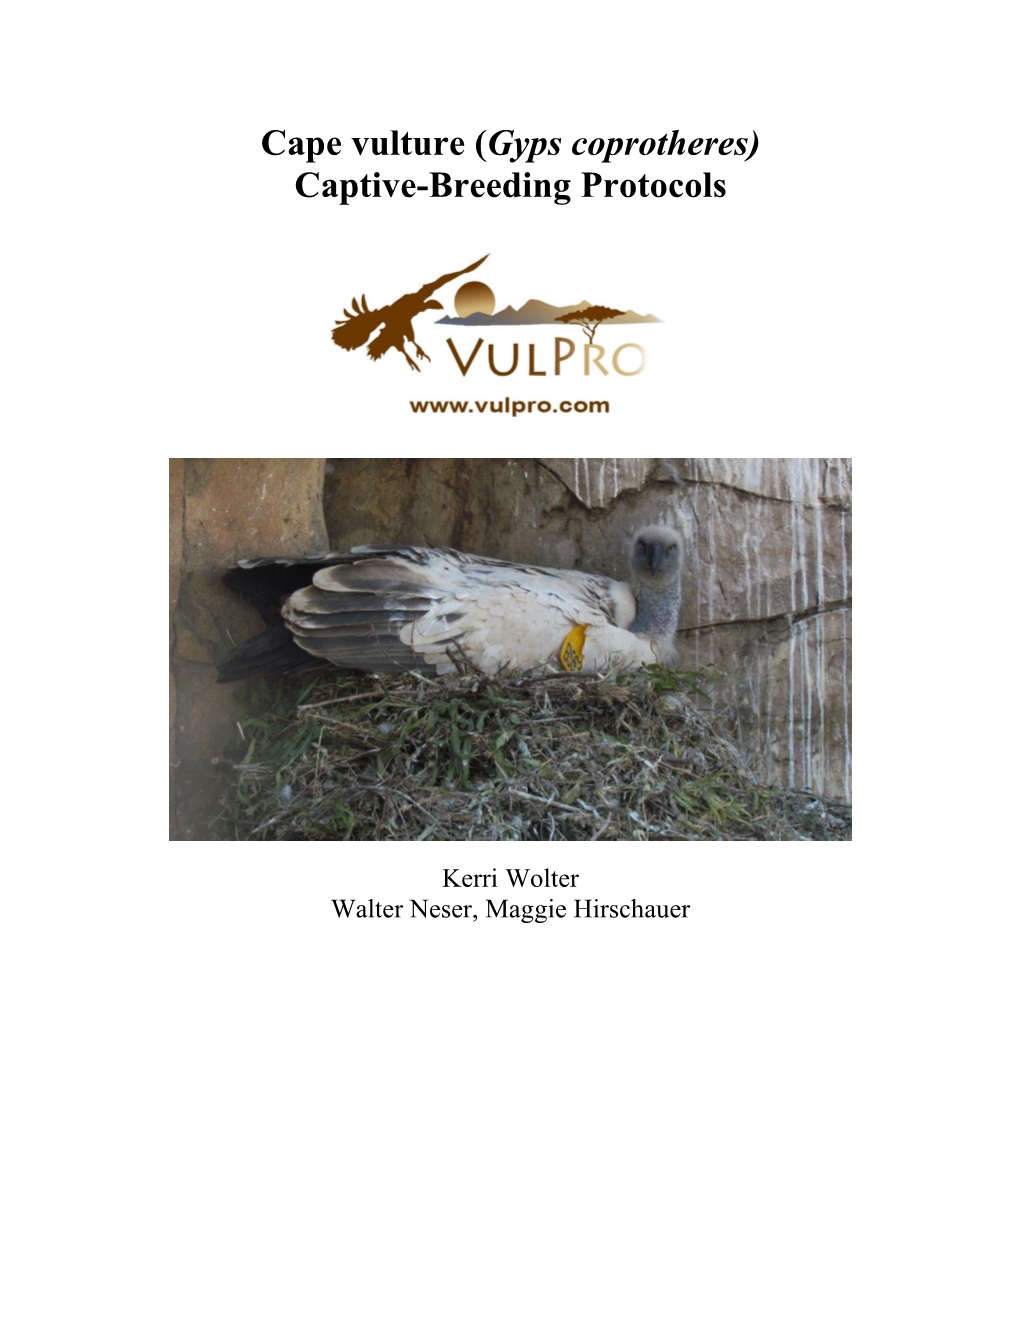 Cape Vulture (Gyps Coprotheres) Captive-Breeding Protocols